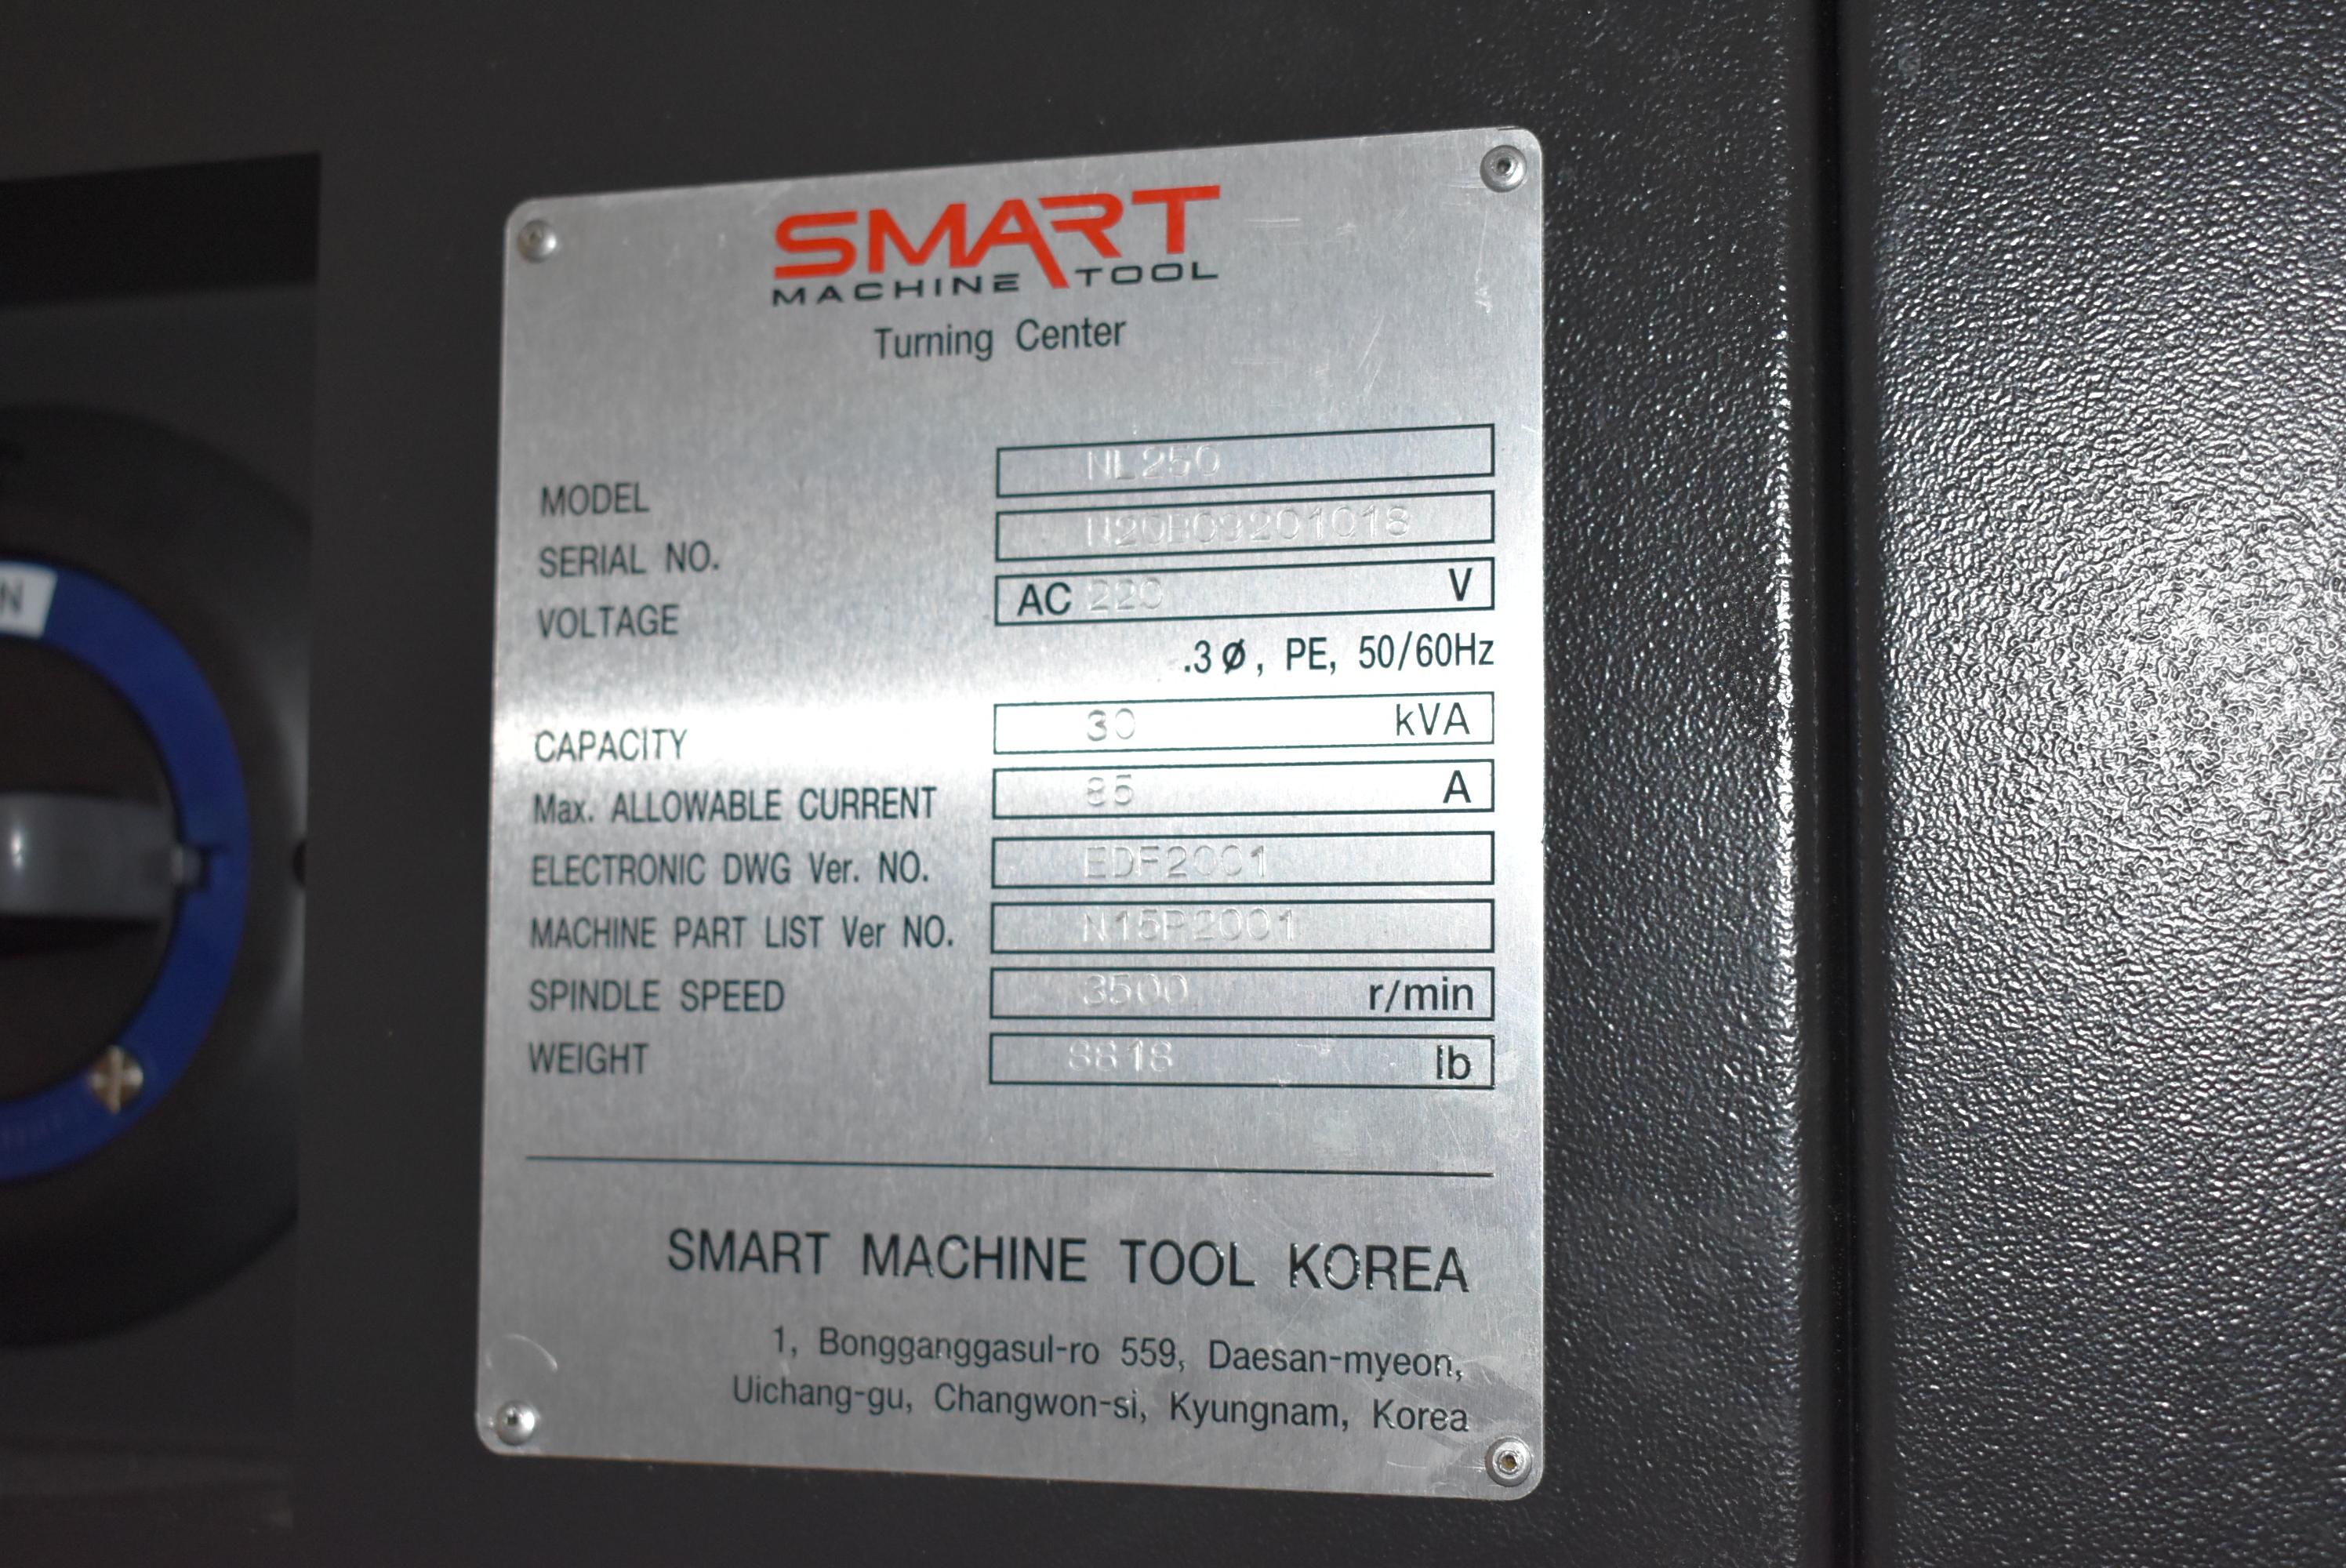 (2020) SMART Machine Tool (Korea) CNC LATHE, Model: NL-250.